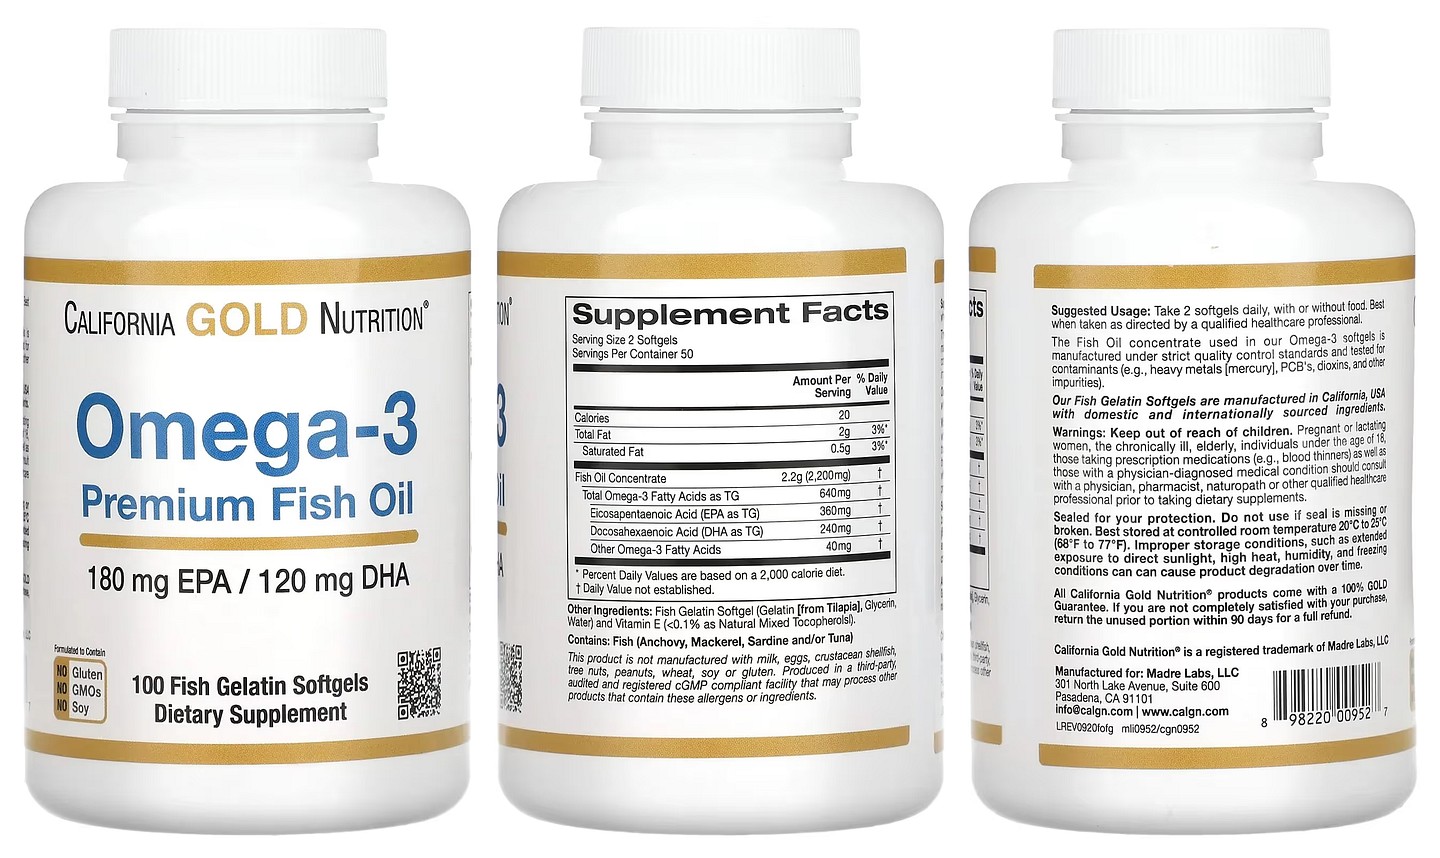 California Gold Nutrition, Omega-3 Premium Fish Oil packaging